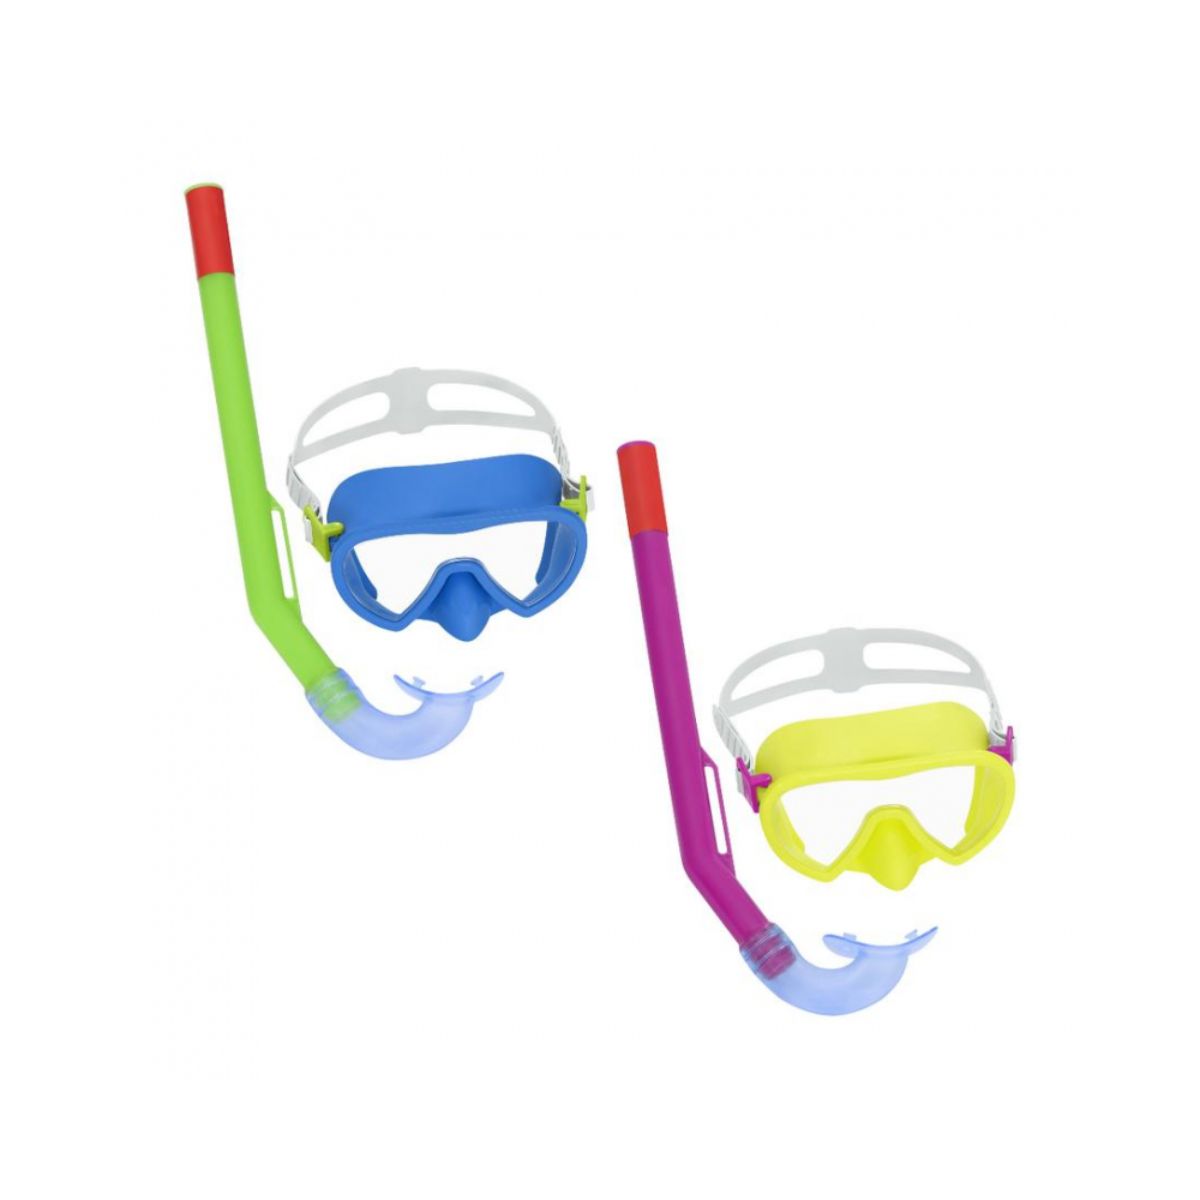 Sport si activitati in aer liber - Set snorkeling ( ochelari si tub snorkel) Bestway Crusader Essential, culori mixte, hectarul.ro